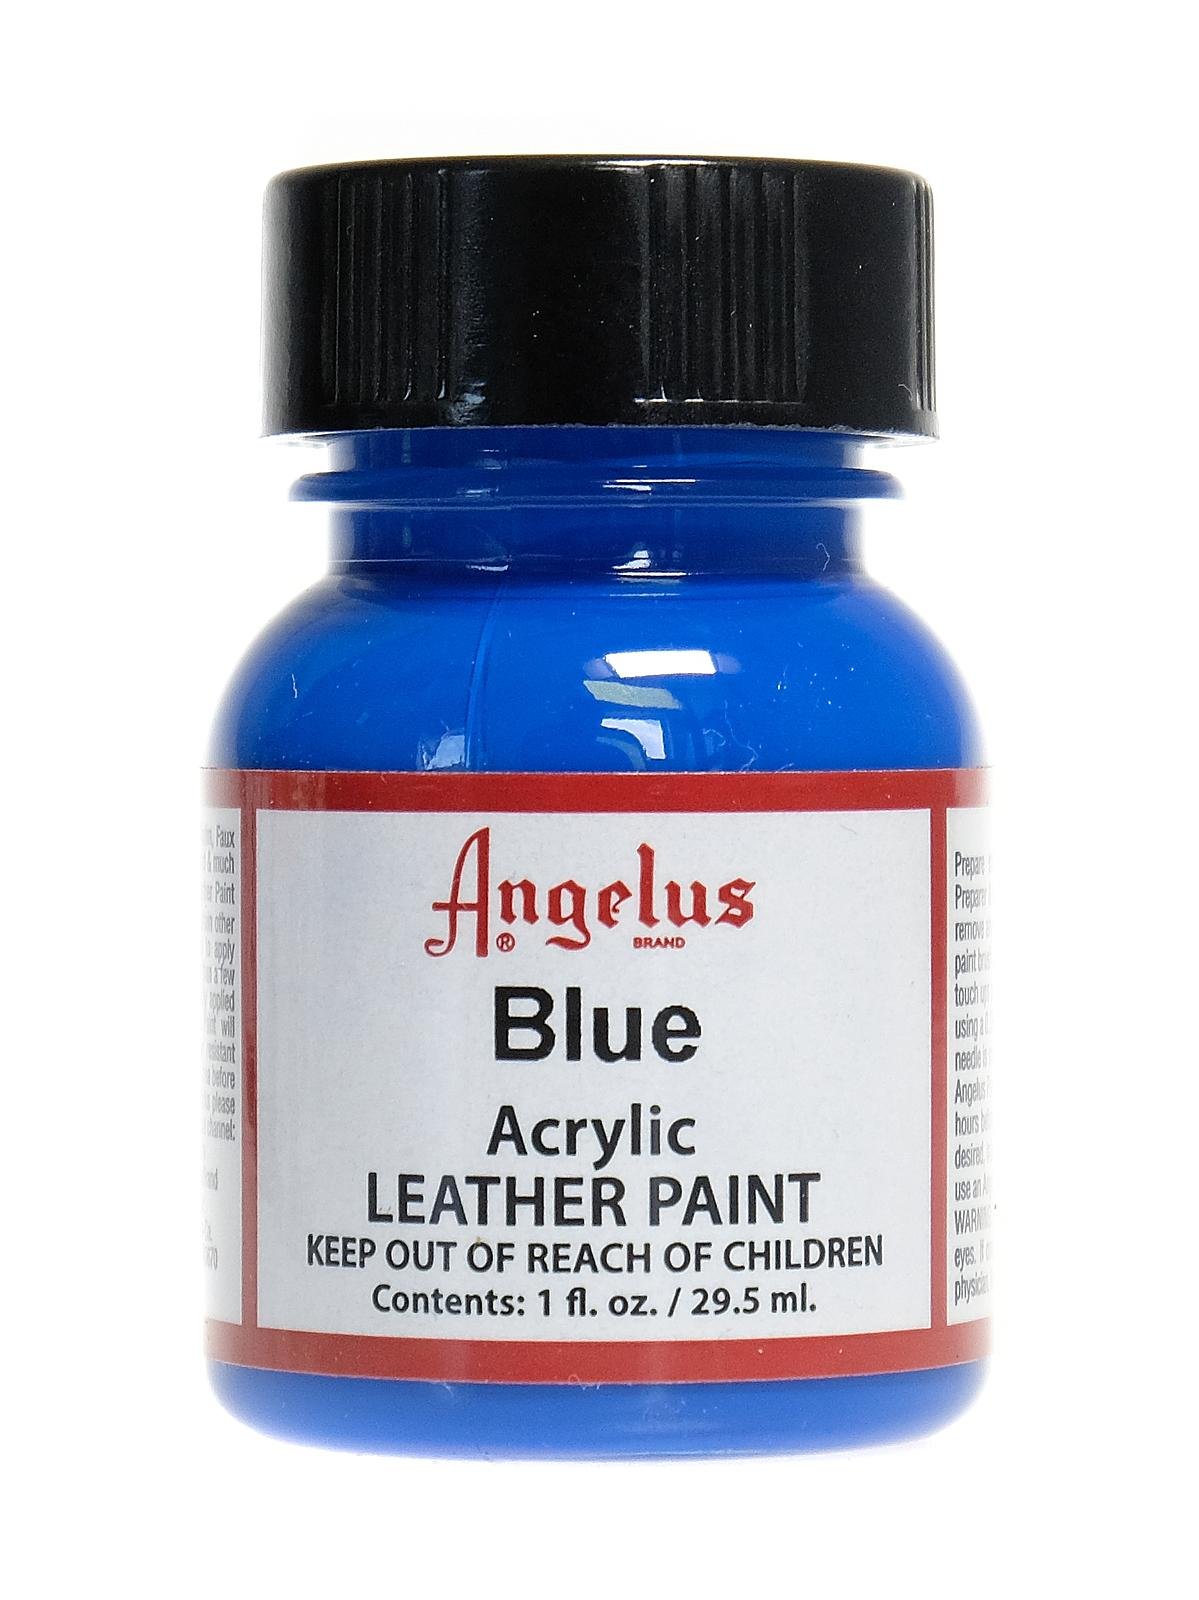 Angelus Acrylic Leather Paint - Capezio Tan, 1 oz